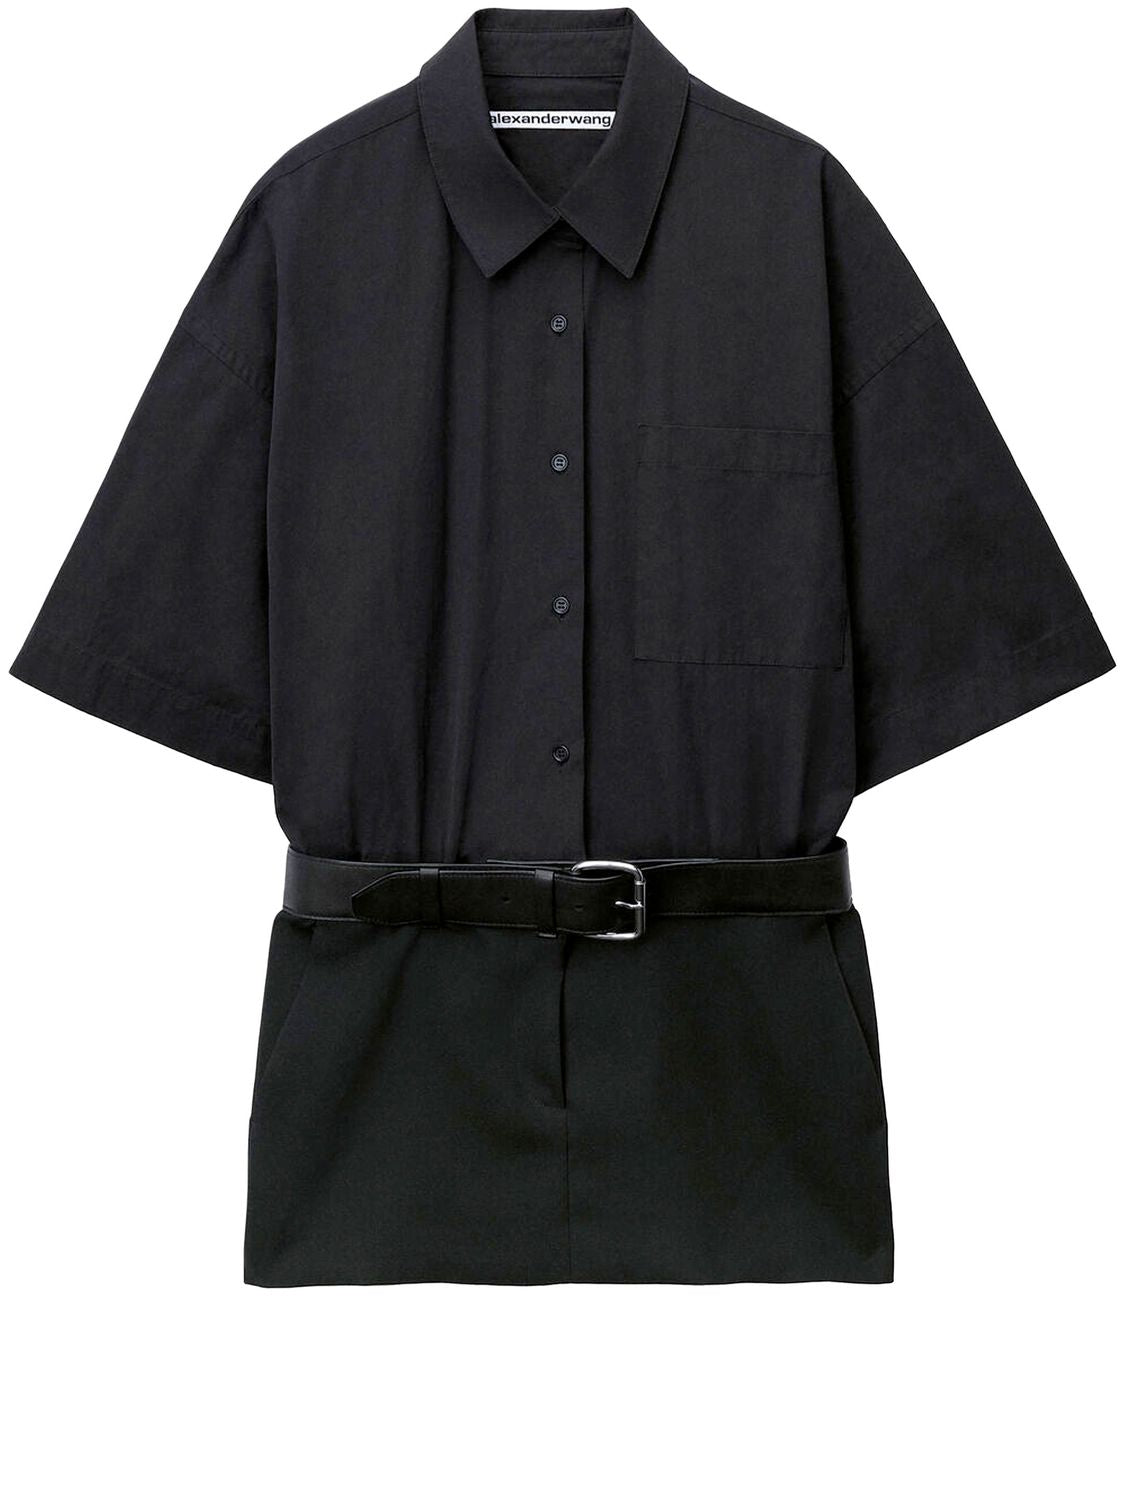 ALEXANDER WANG Black Mini Shirtdress with Belted Waistband for Women